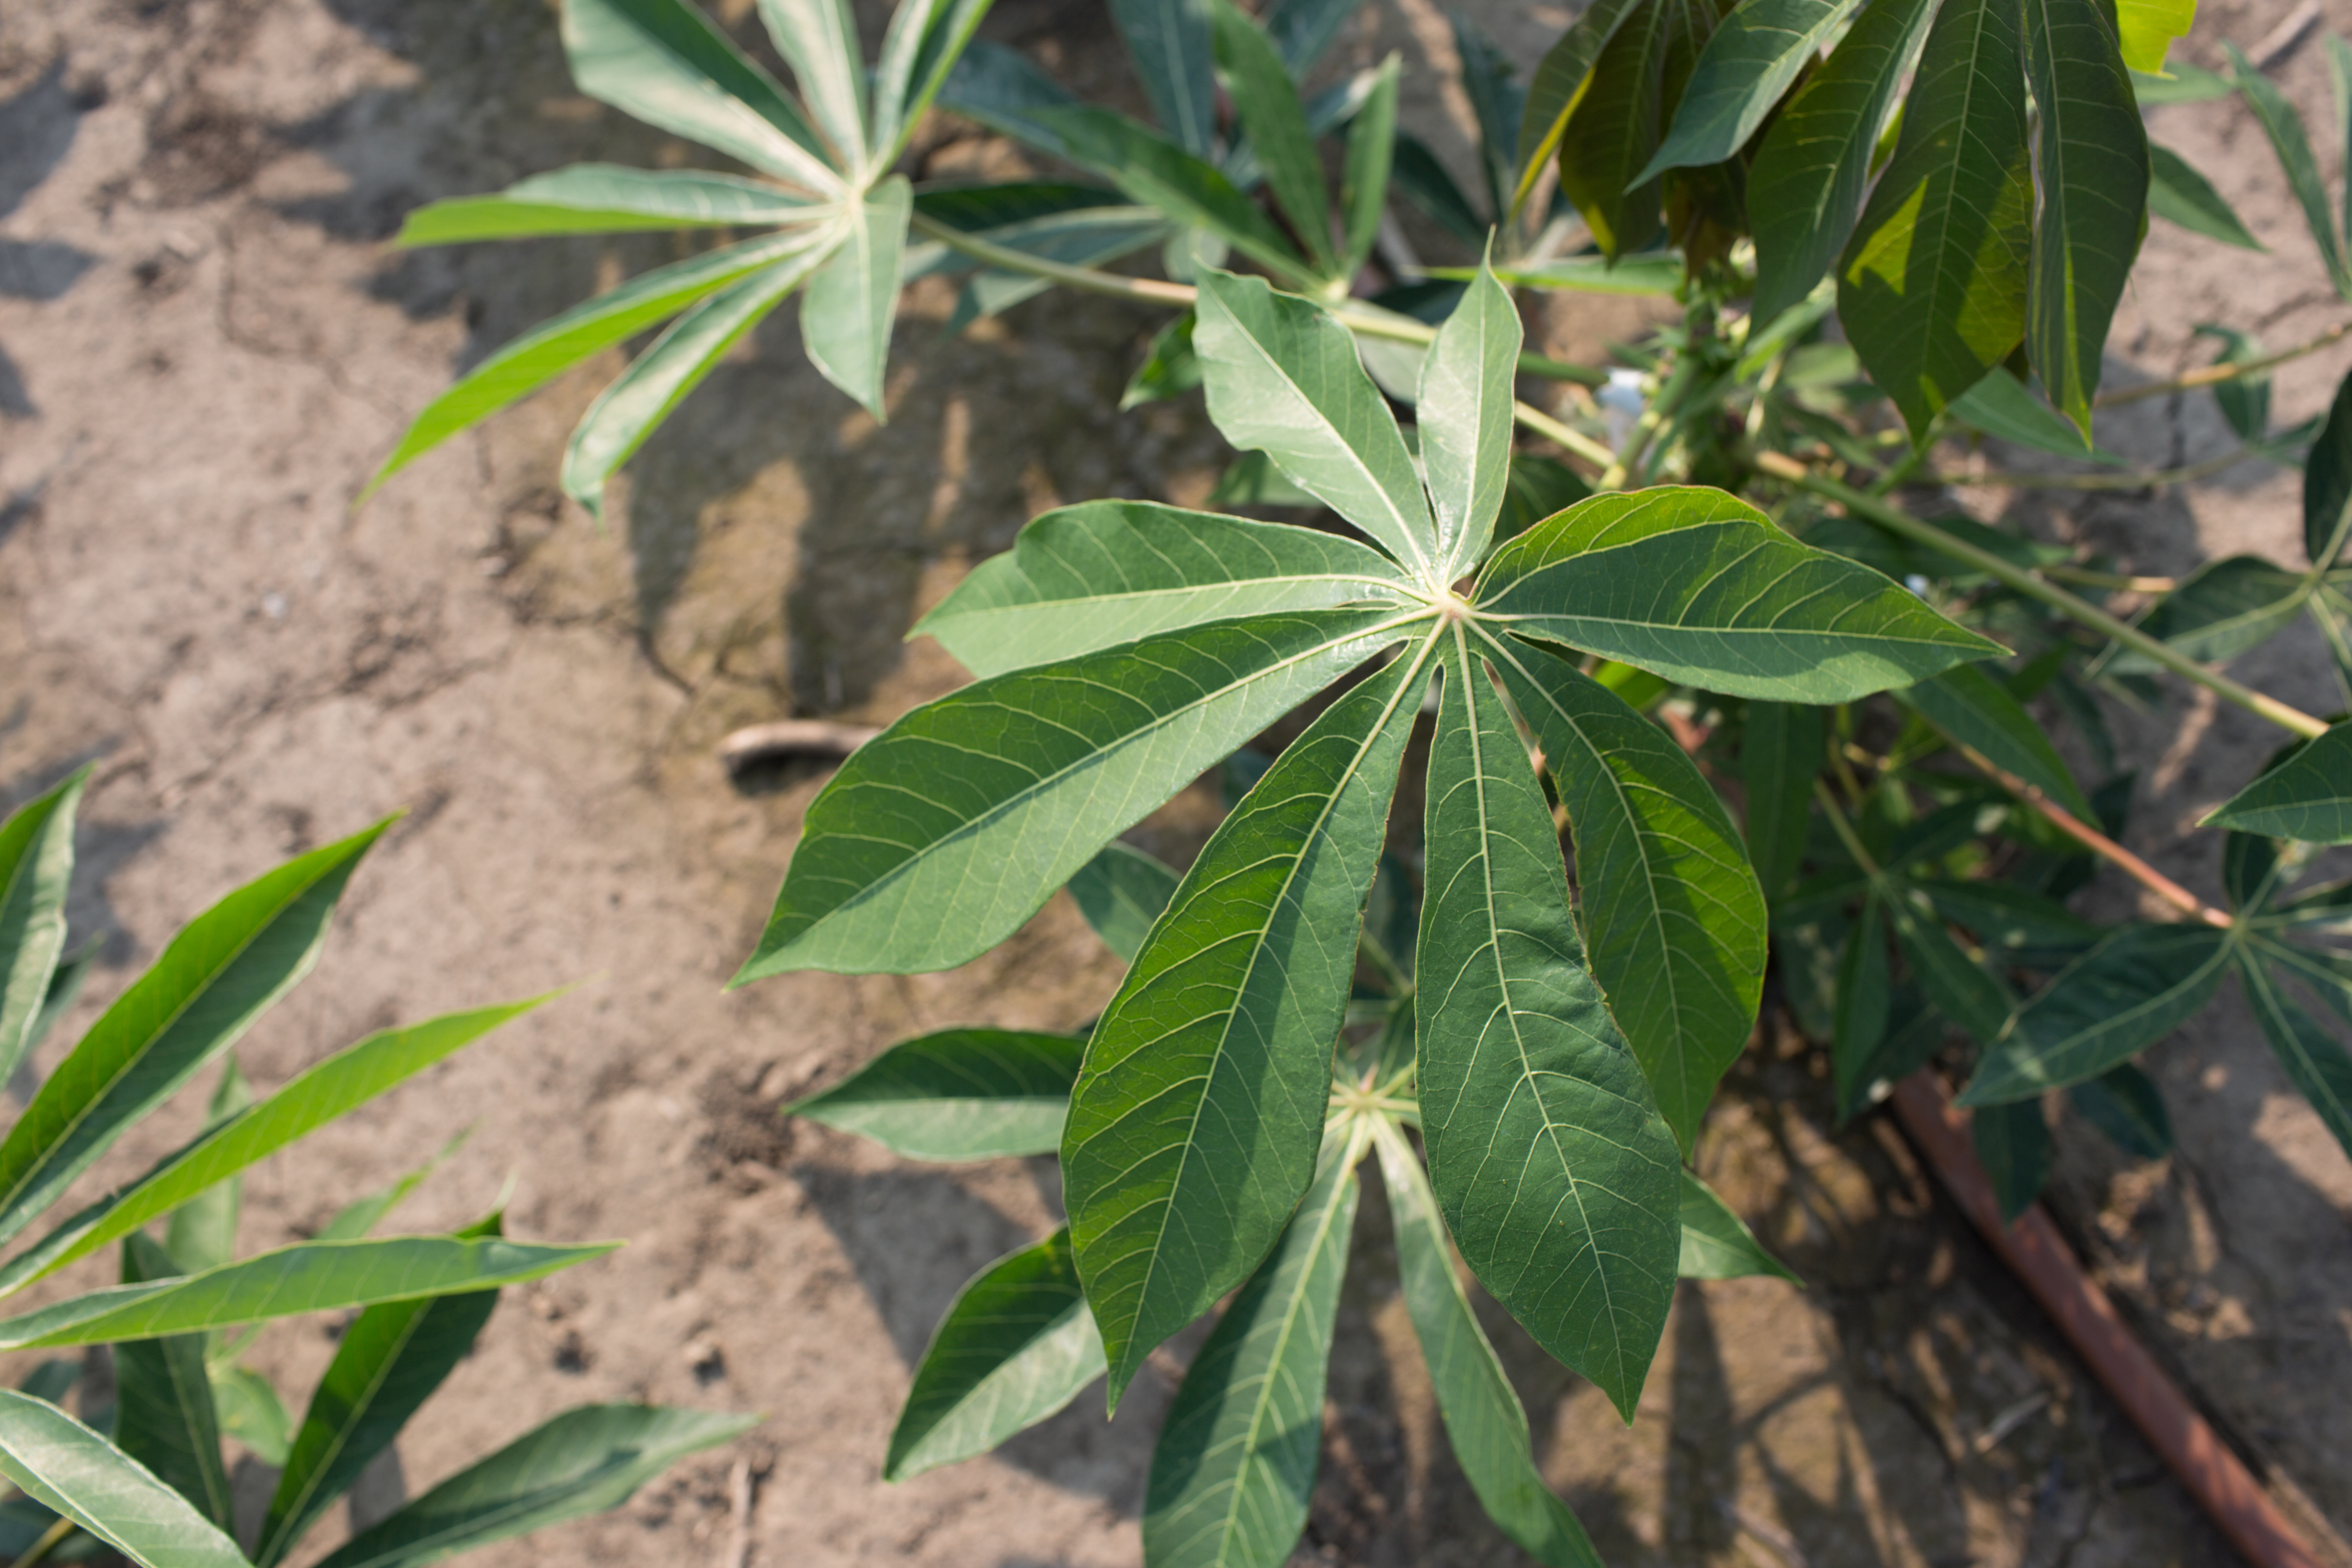 Cassava in the field.